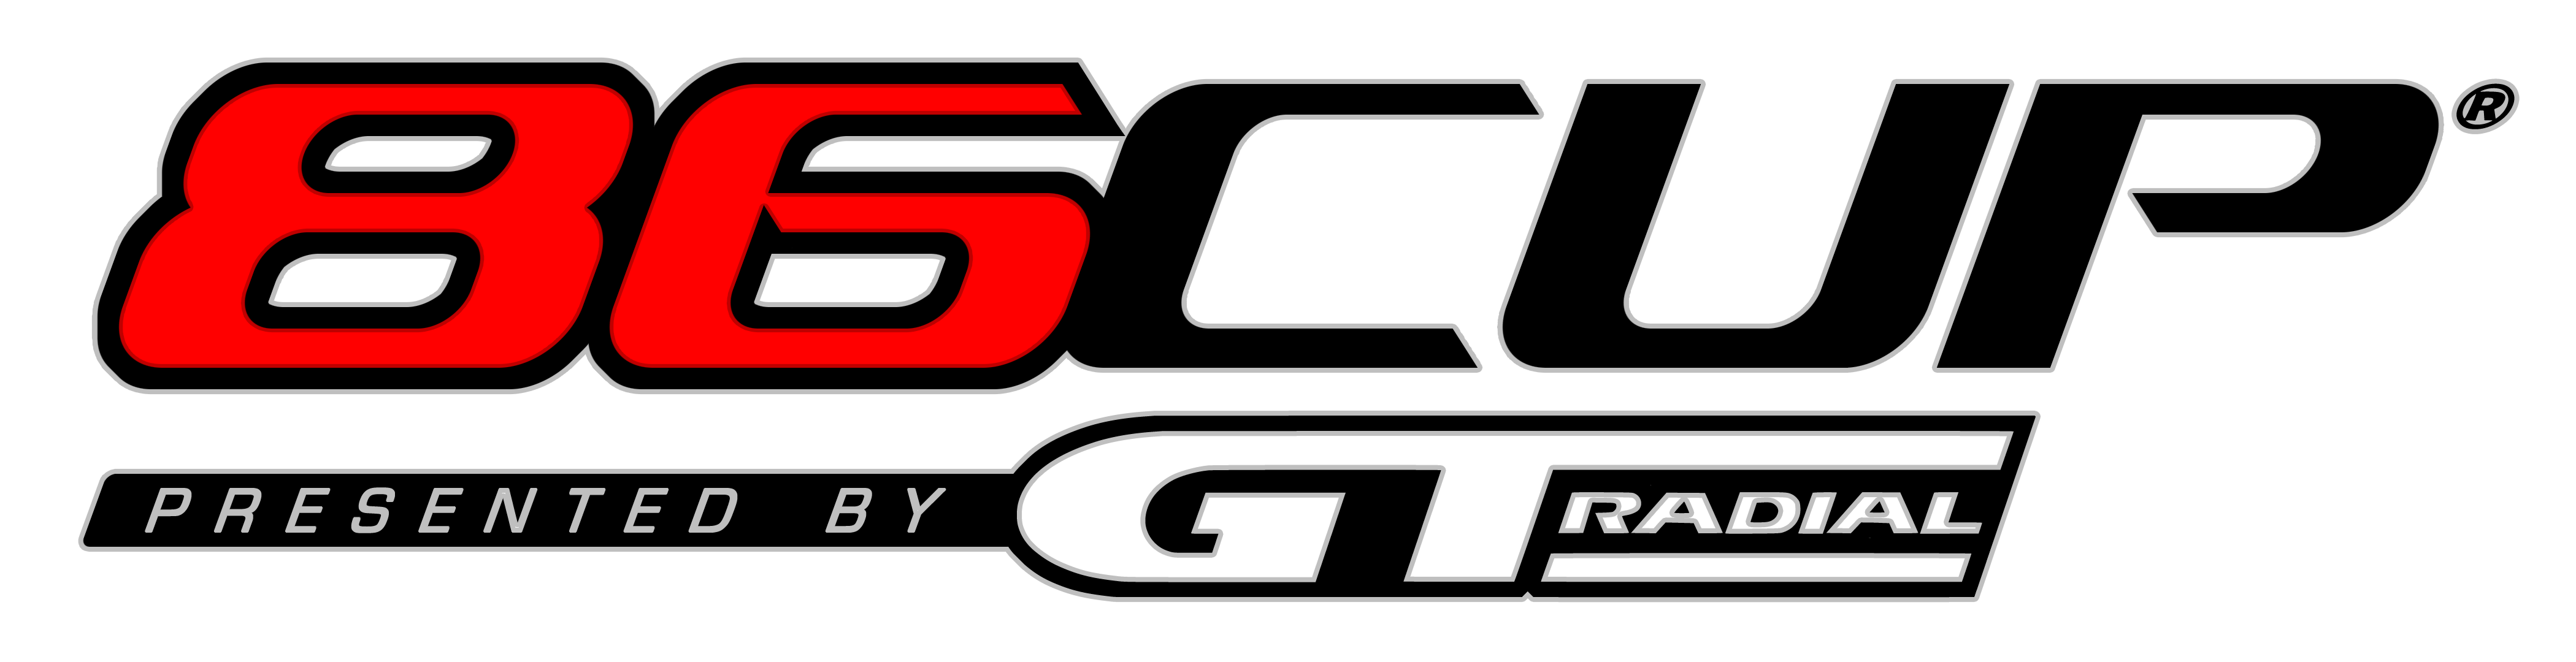 86 cup logo gtradial